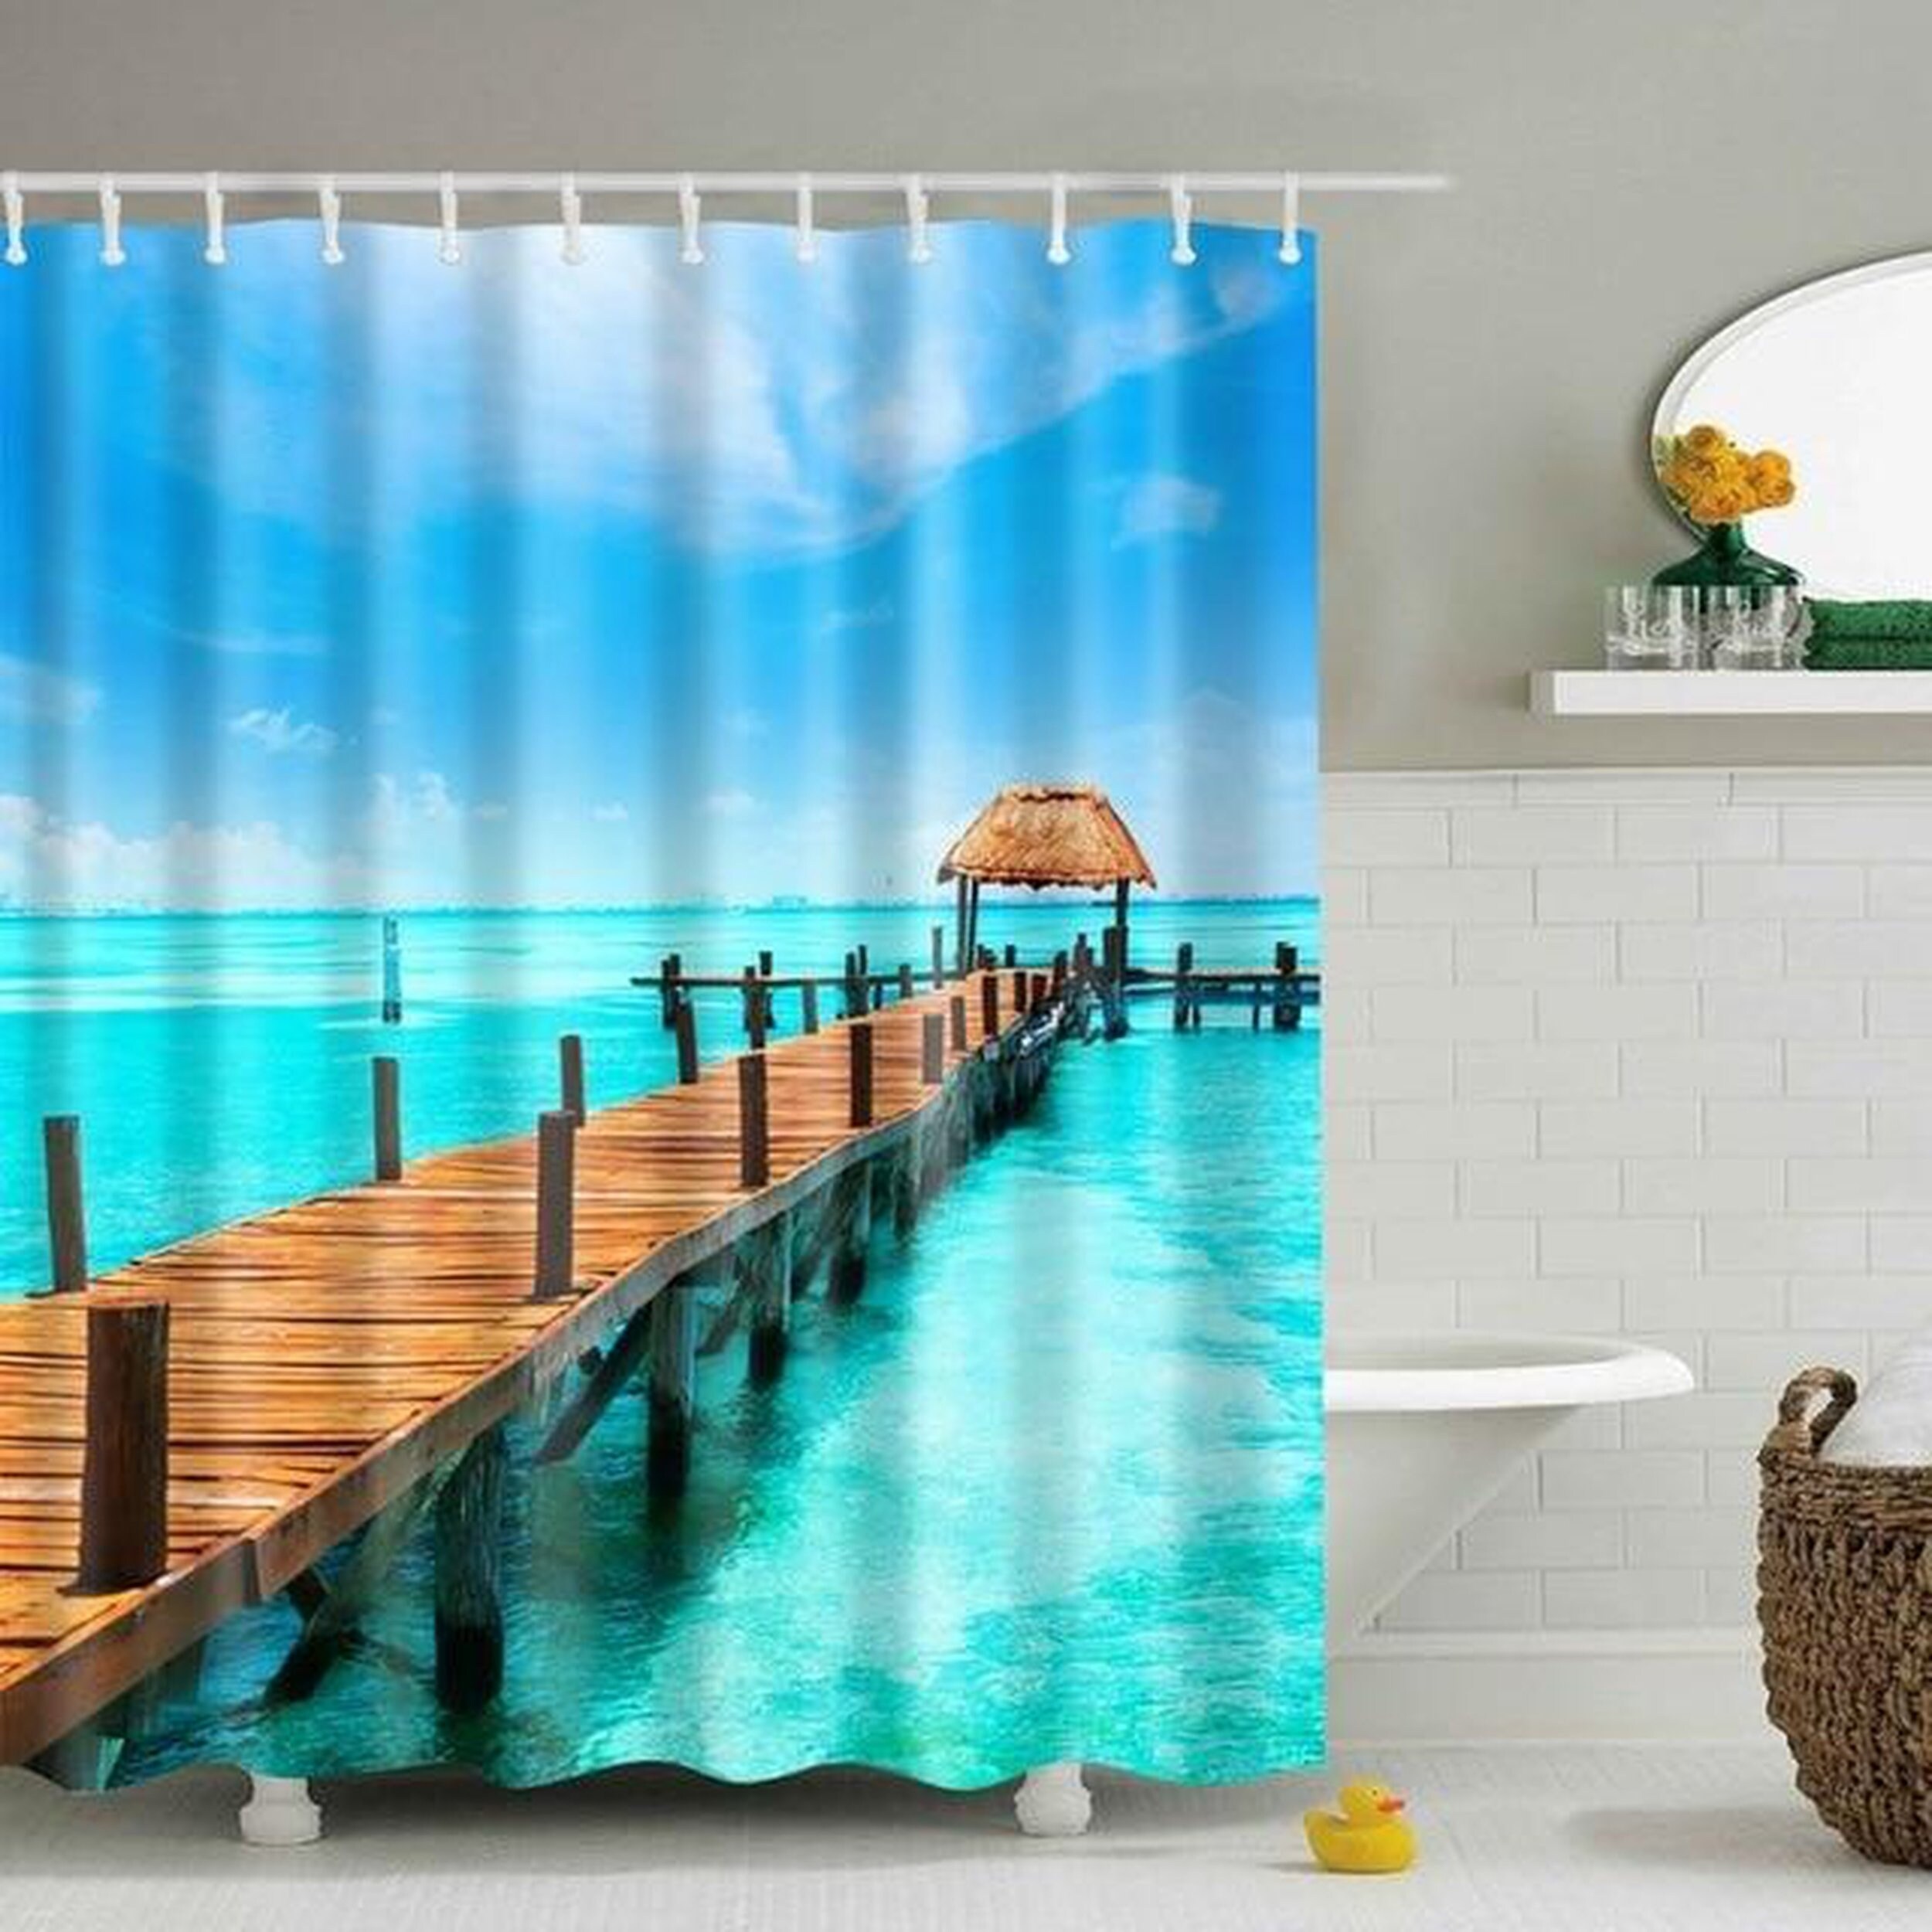 Multi Tree Printing Shower Curtain Bathroom Waterproof Extra Long 180*180cm 